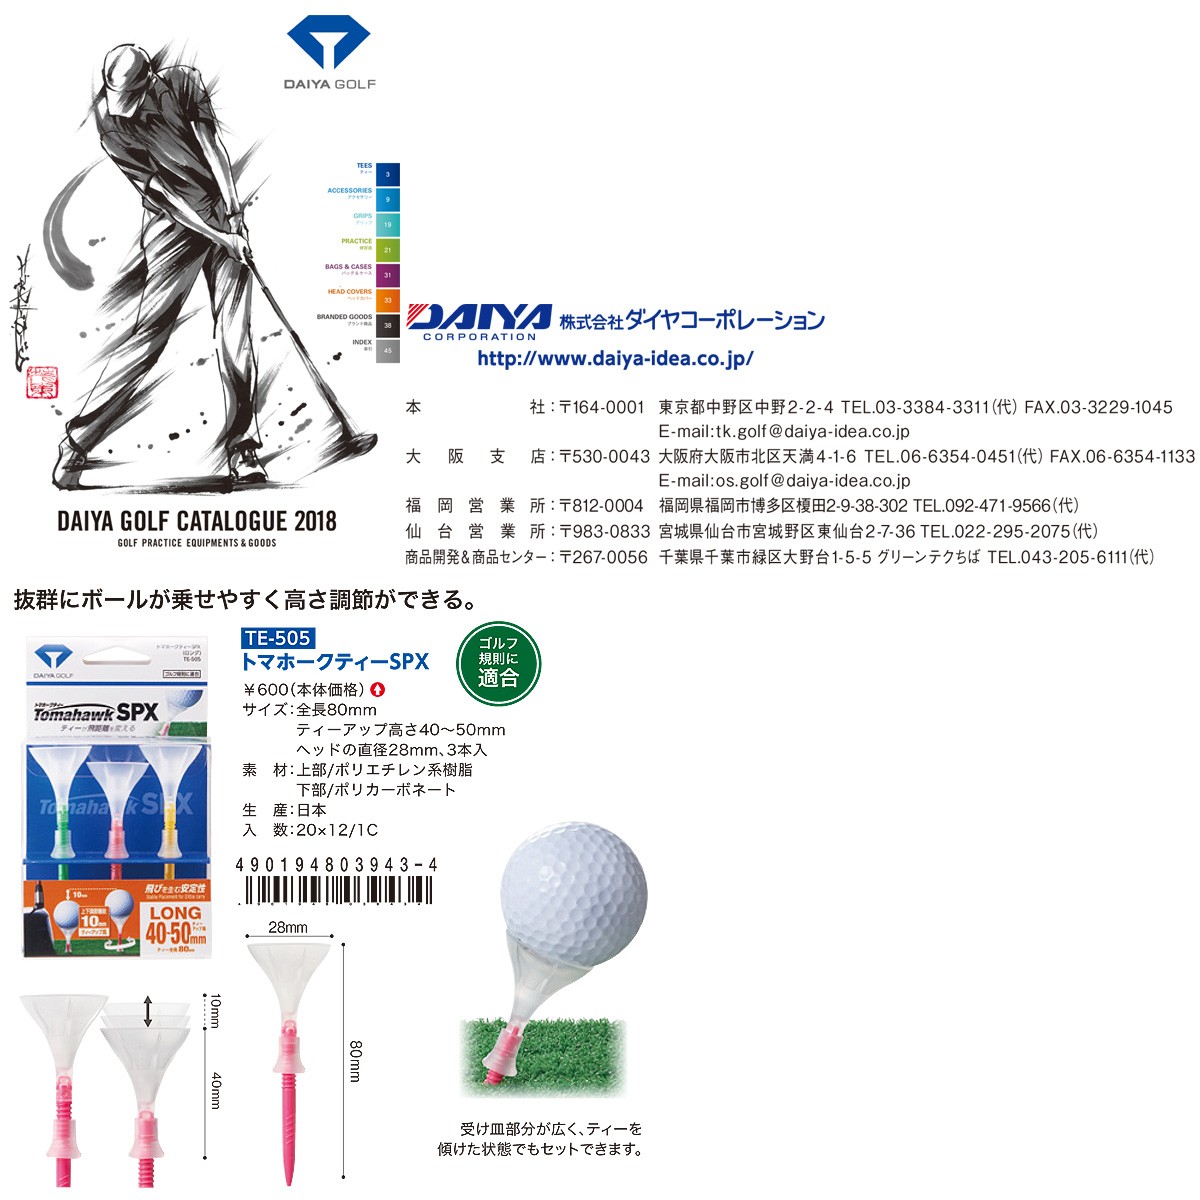 DAIYA GOLF(ダイヤゴルフ)日本正規品 Tomahawk SPX(トマホークティーSPX) 大型ヘッド 「ティーアップ高40〜50mm(3本入)  TE-505」 :daiya-te505:EZAKI NET GOLF - 通販 - Yahoo!ショッピング